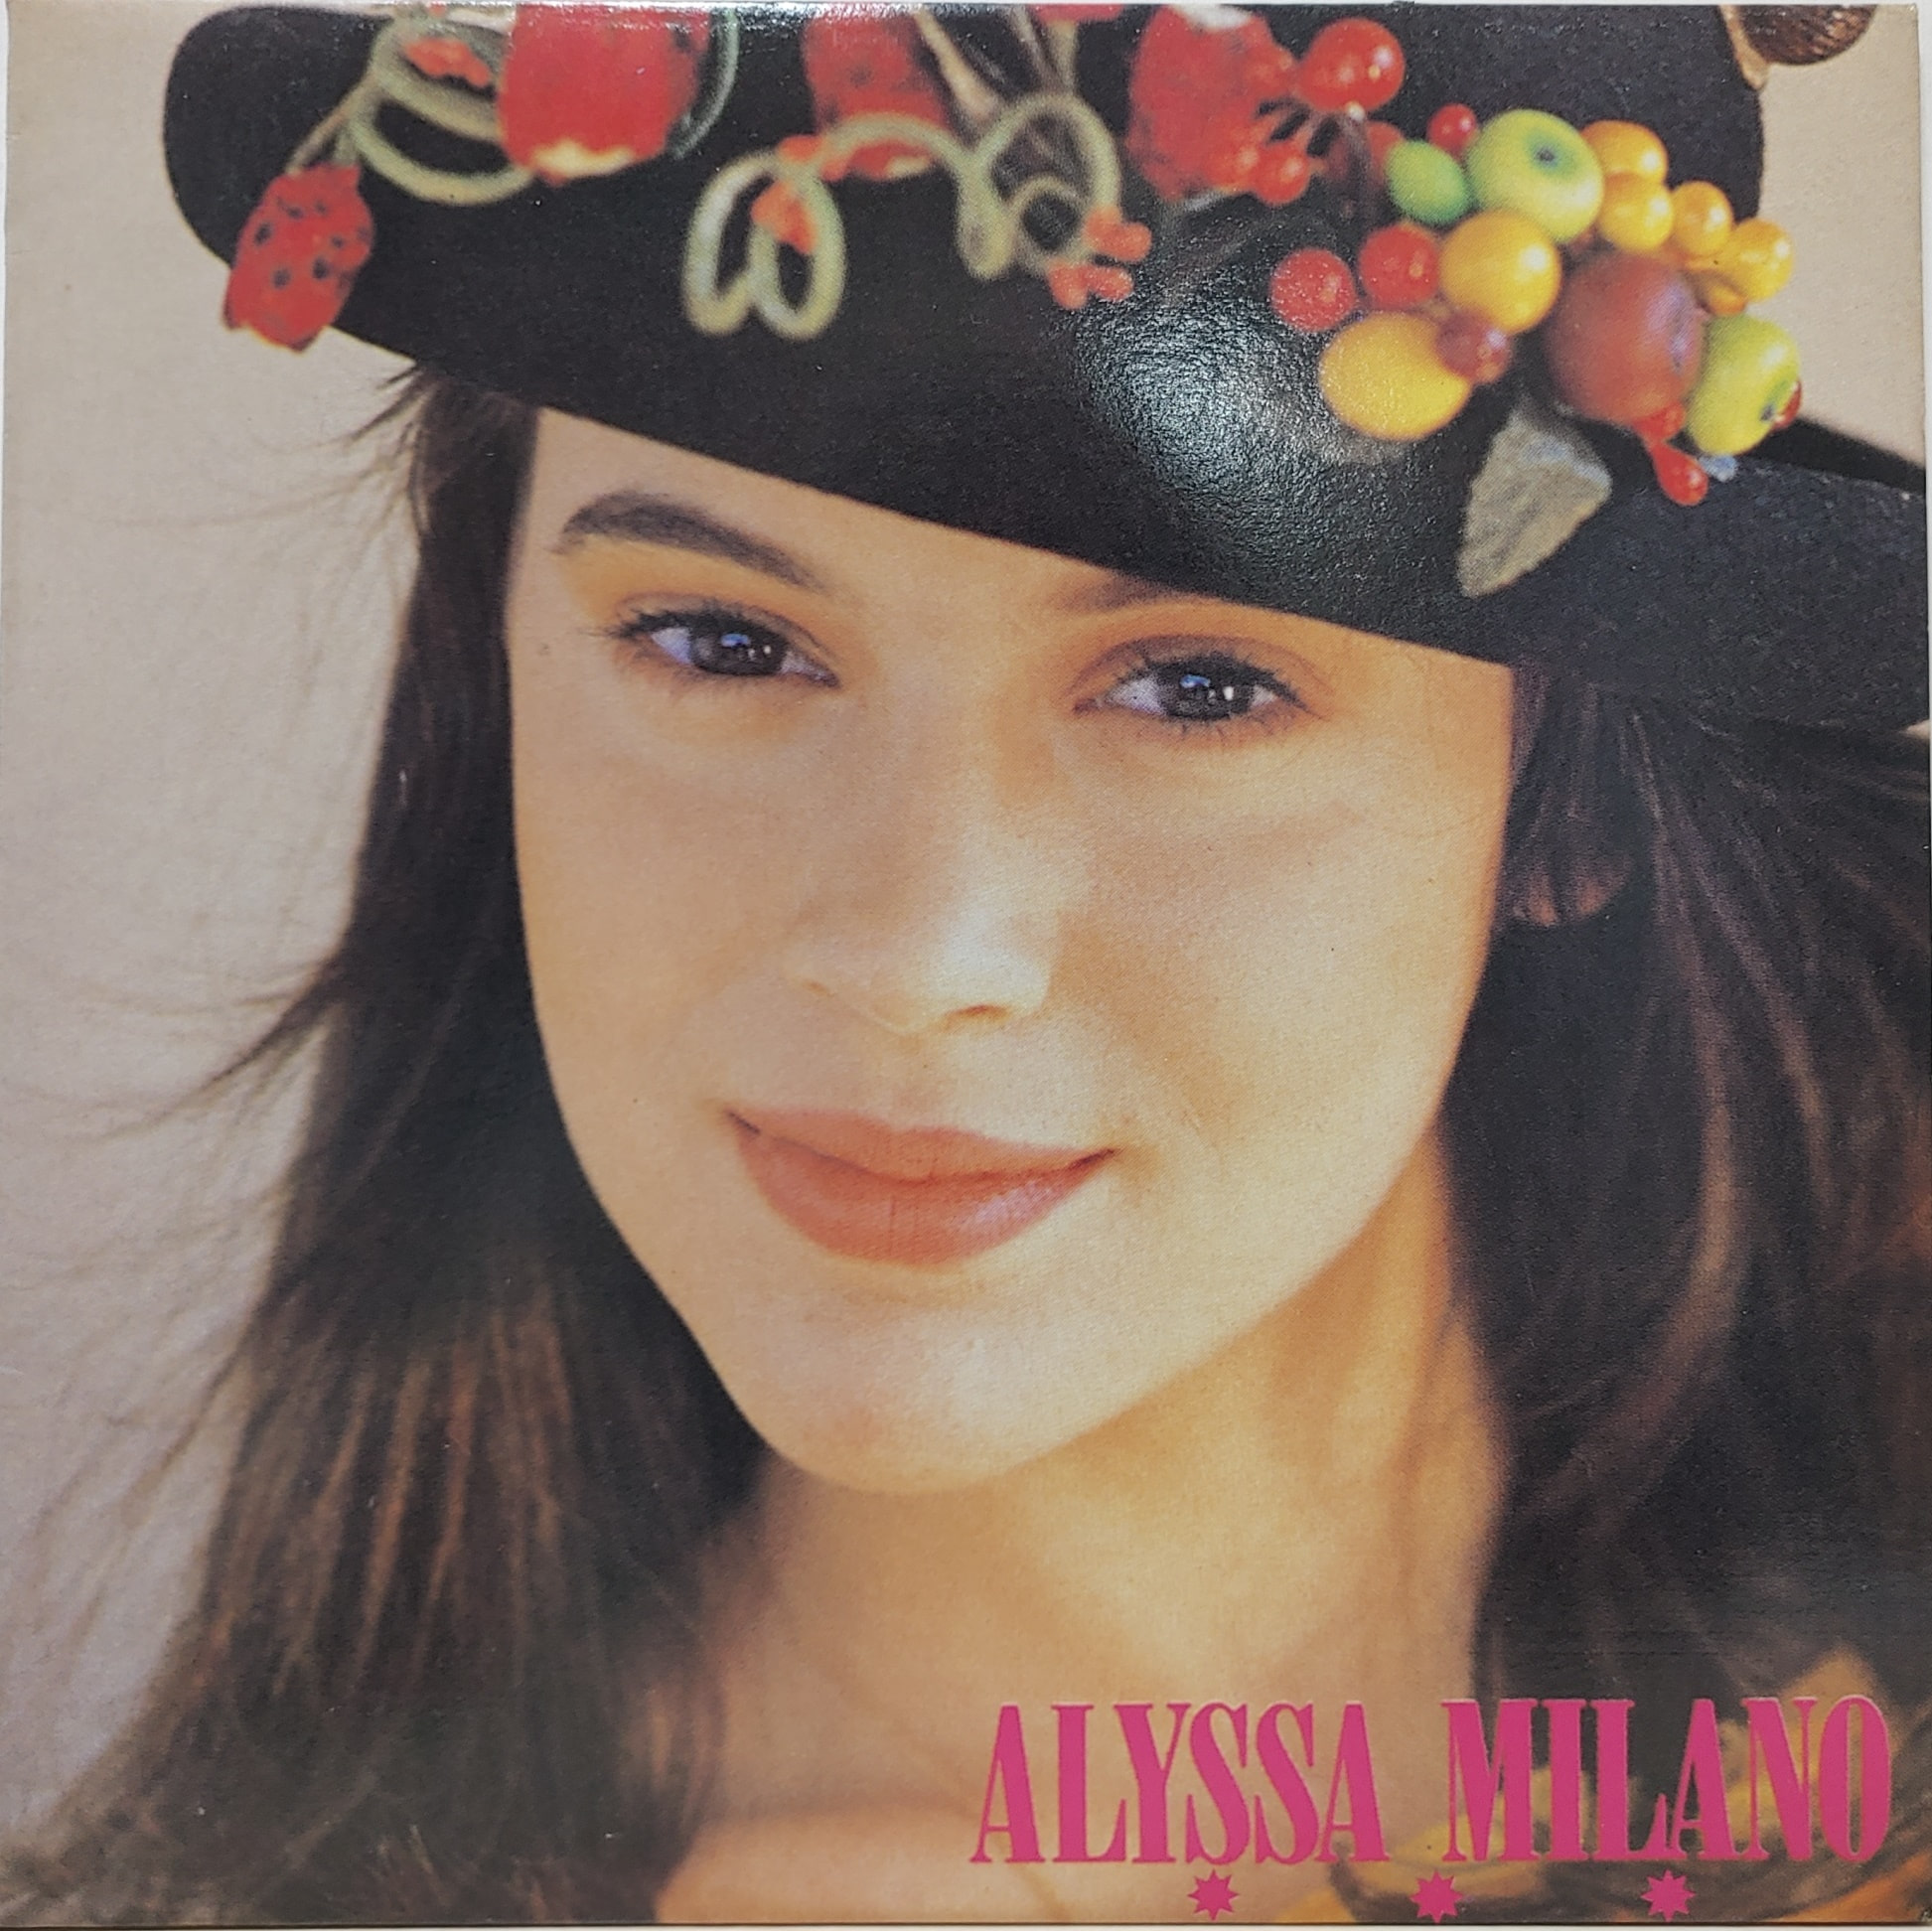 ALYSSA MILANO / THE BEST IN THE WORLD